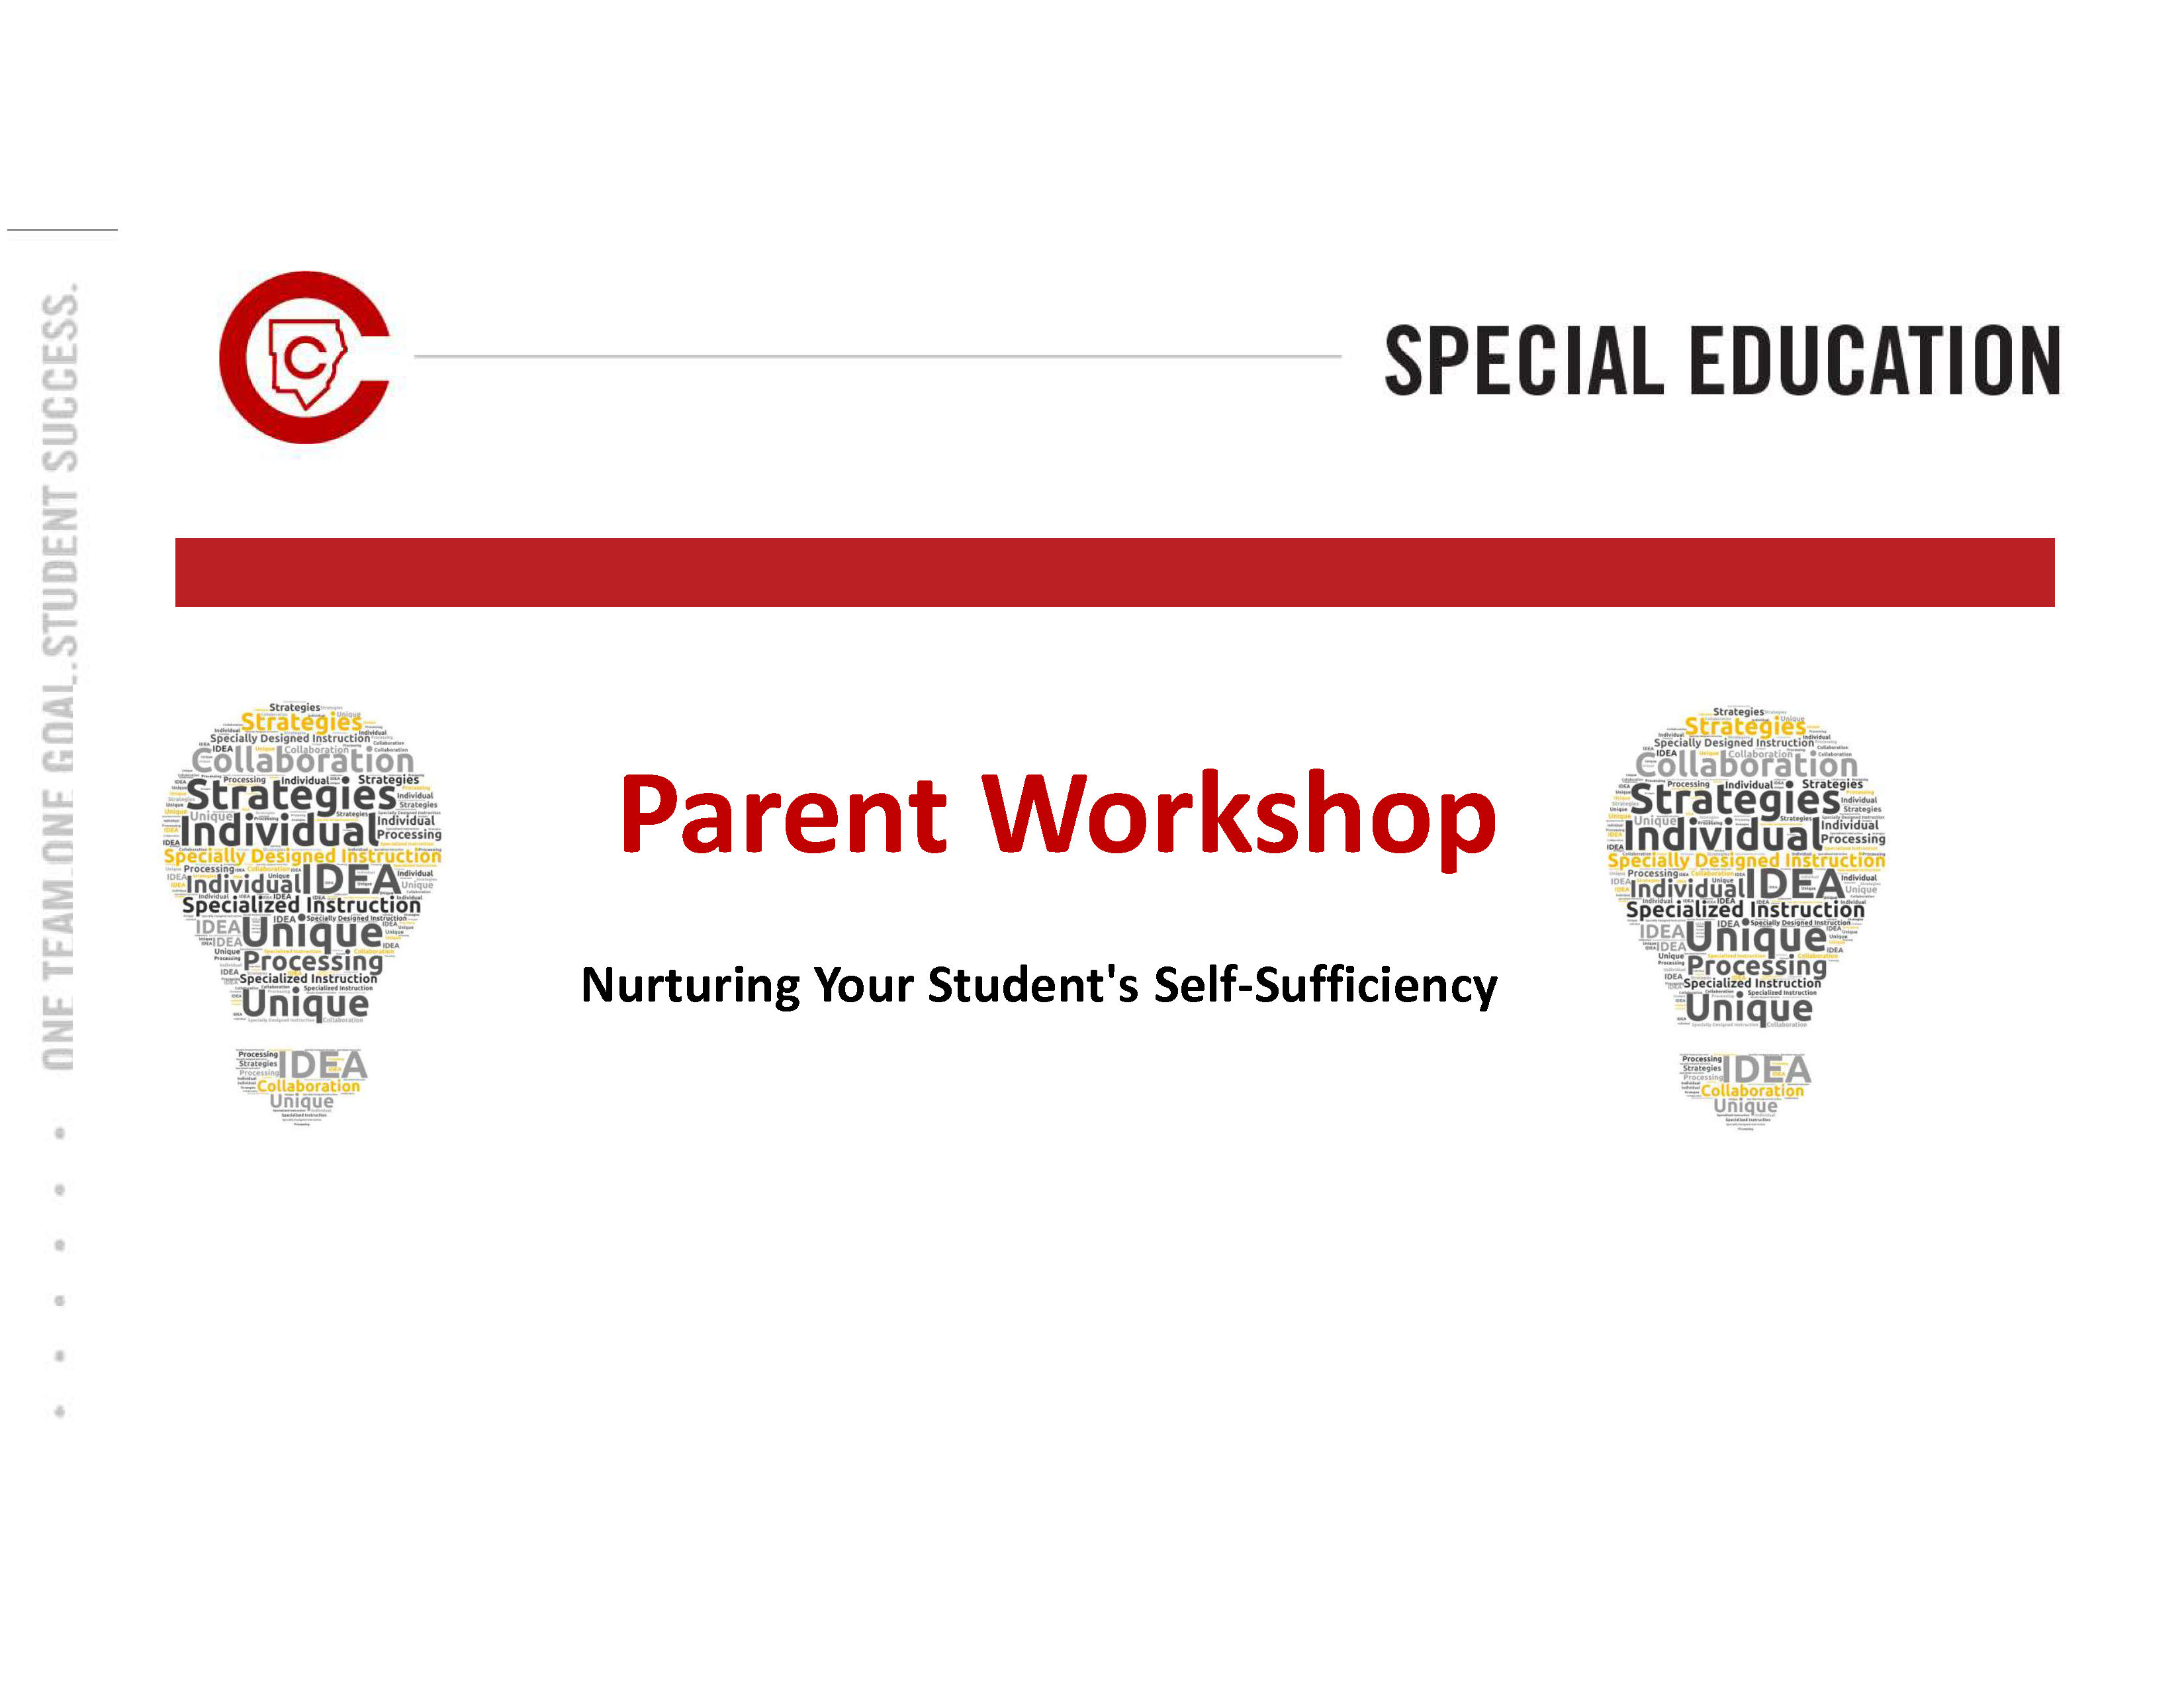 Parent Workshop: Nurturing Your Student's Self-Sufficiency